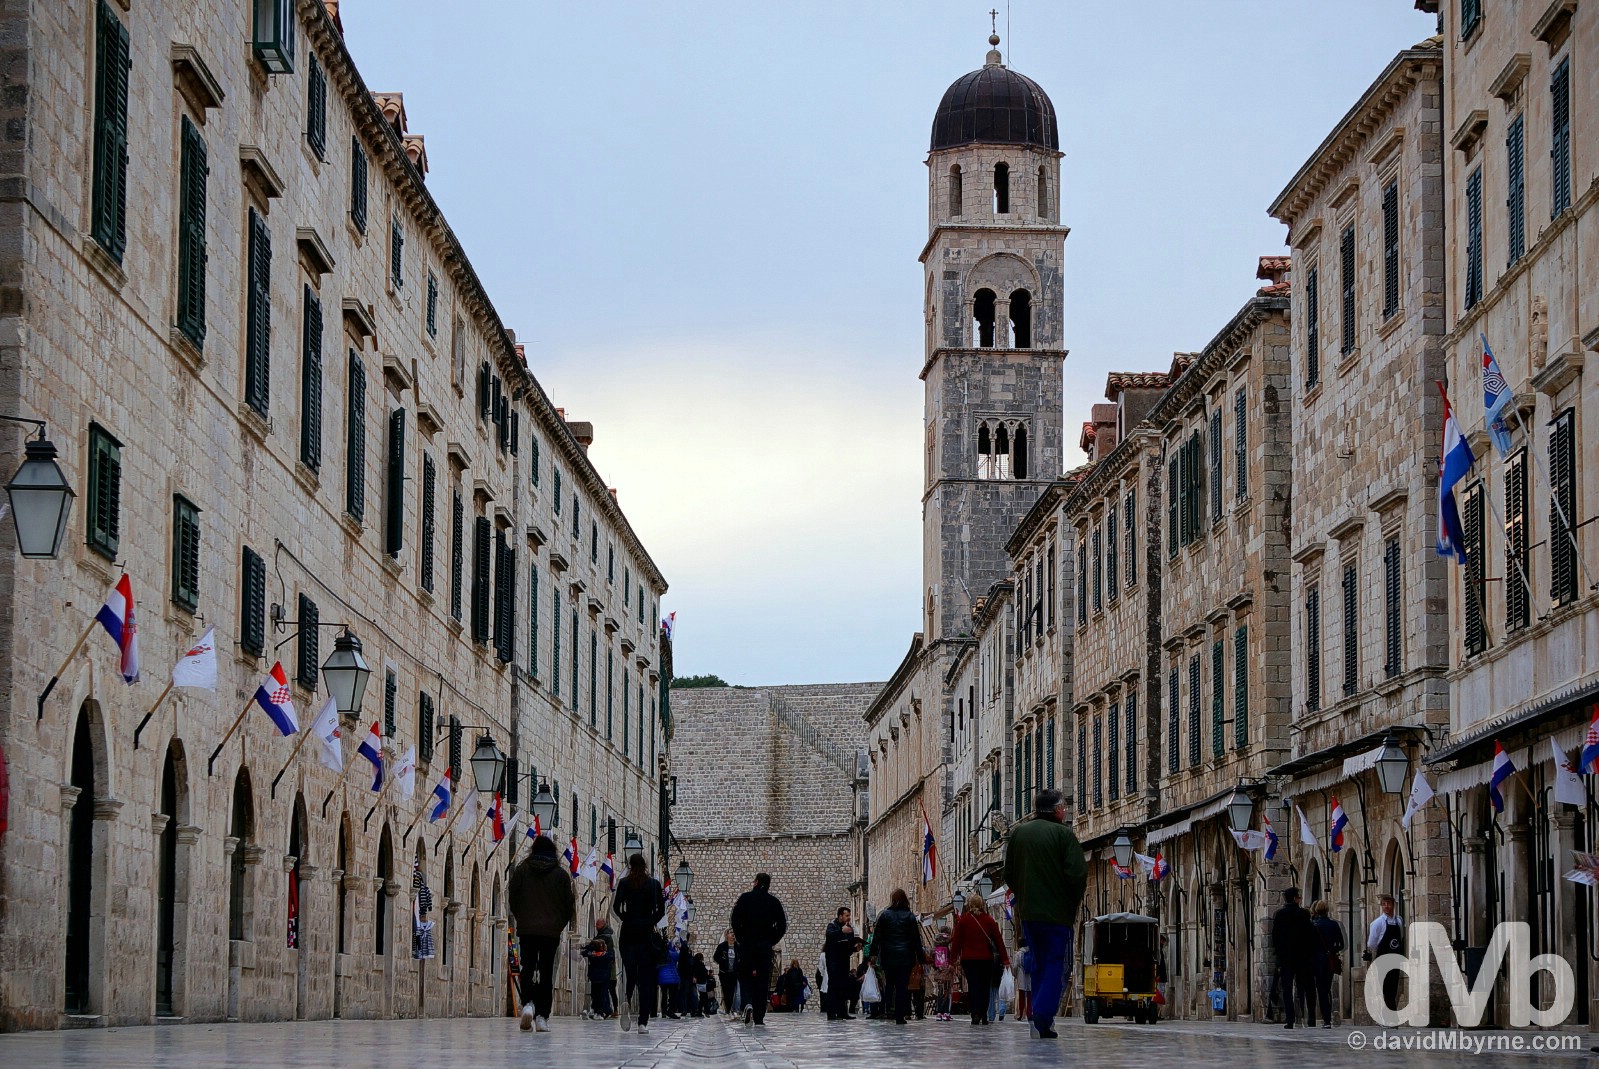 Placa, Old Town, Dubrovnik, Croatia. April 6, 2015.